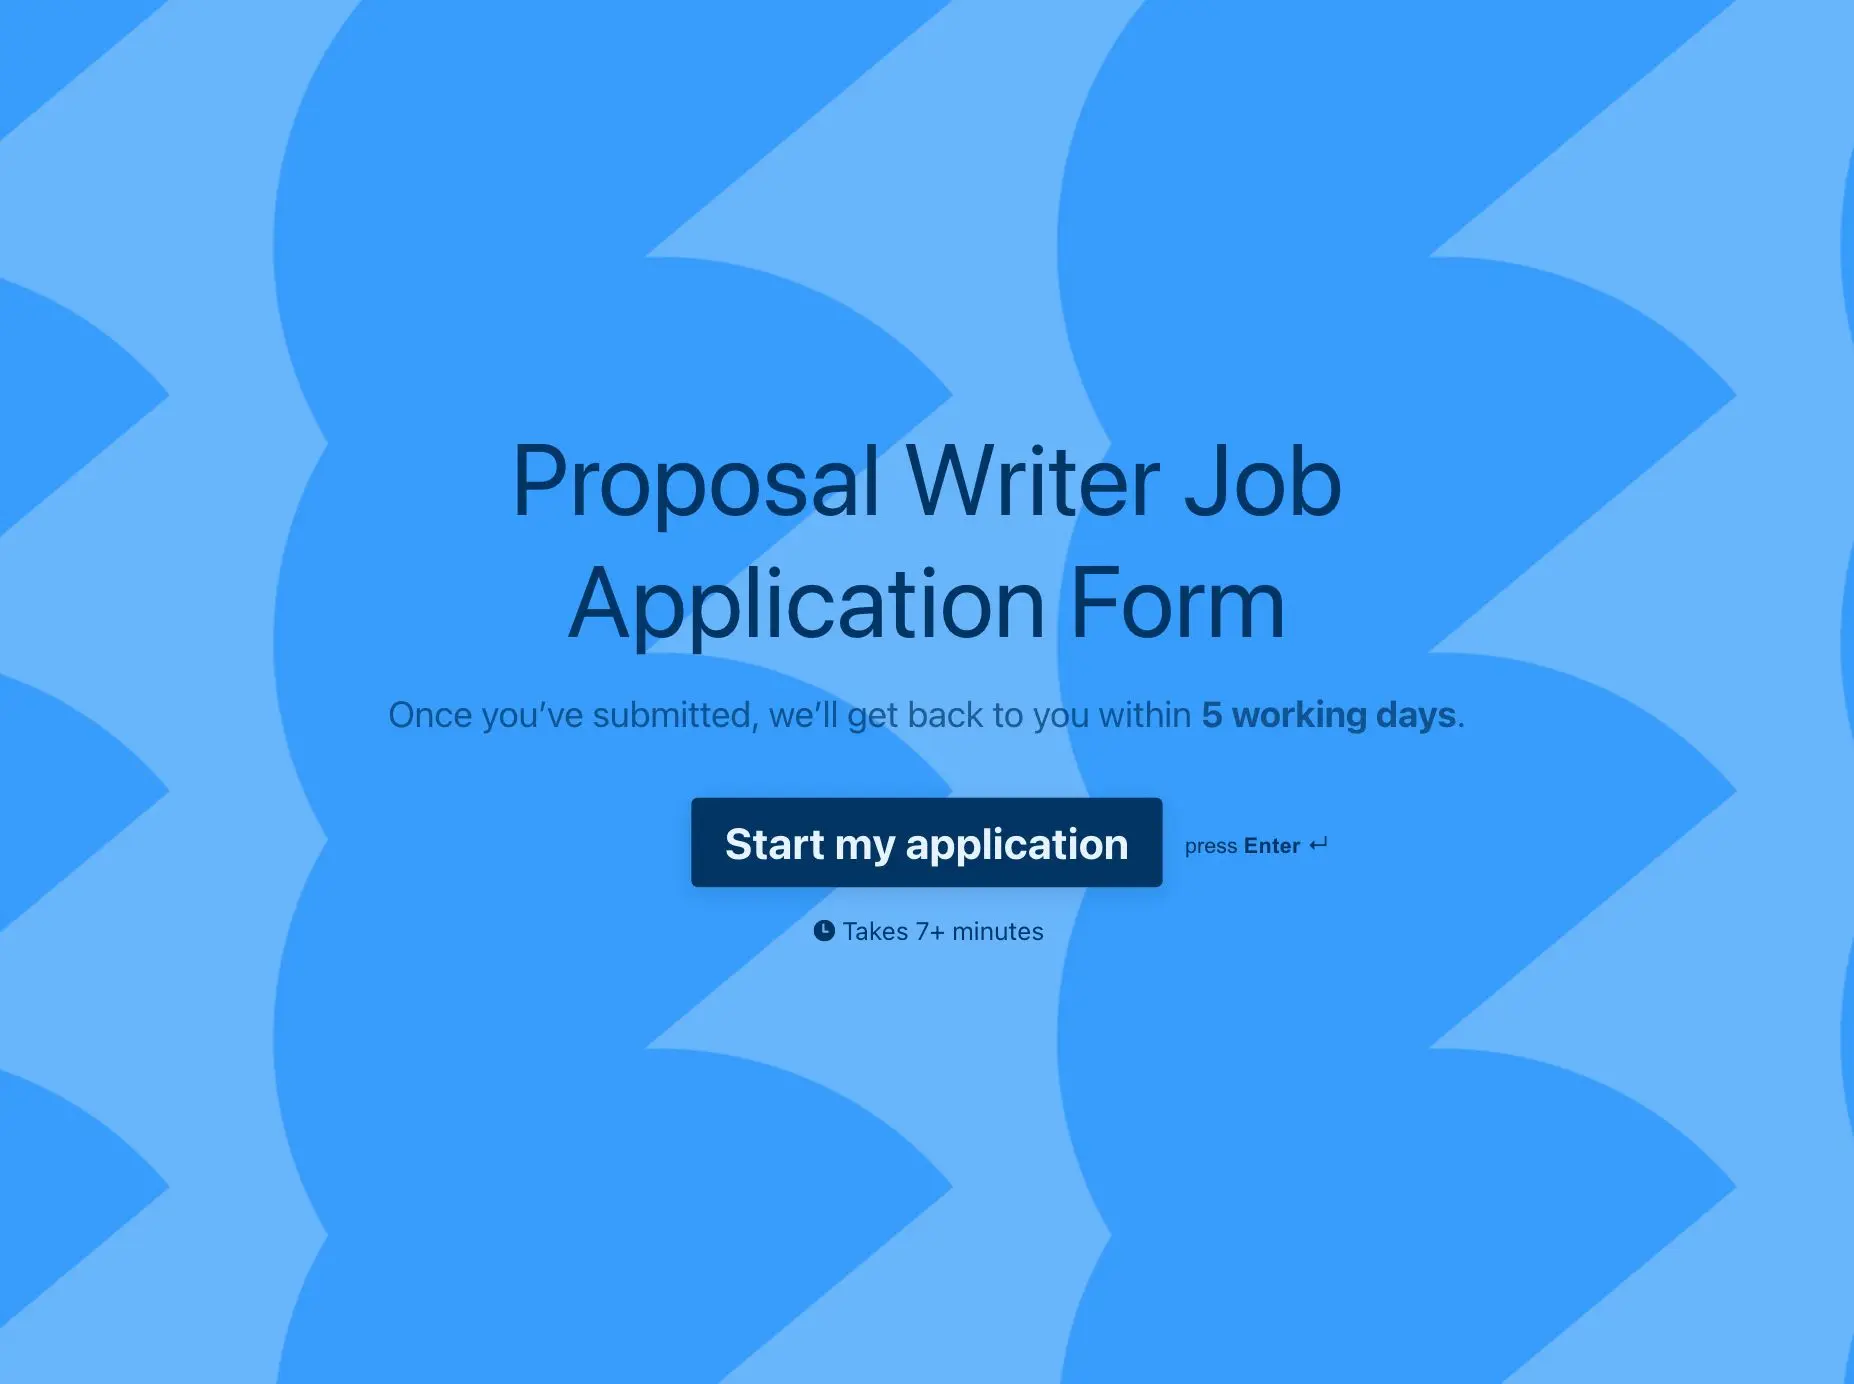 Proposal Writer Job Application Form Template Hero